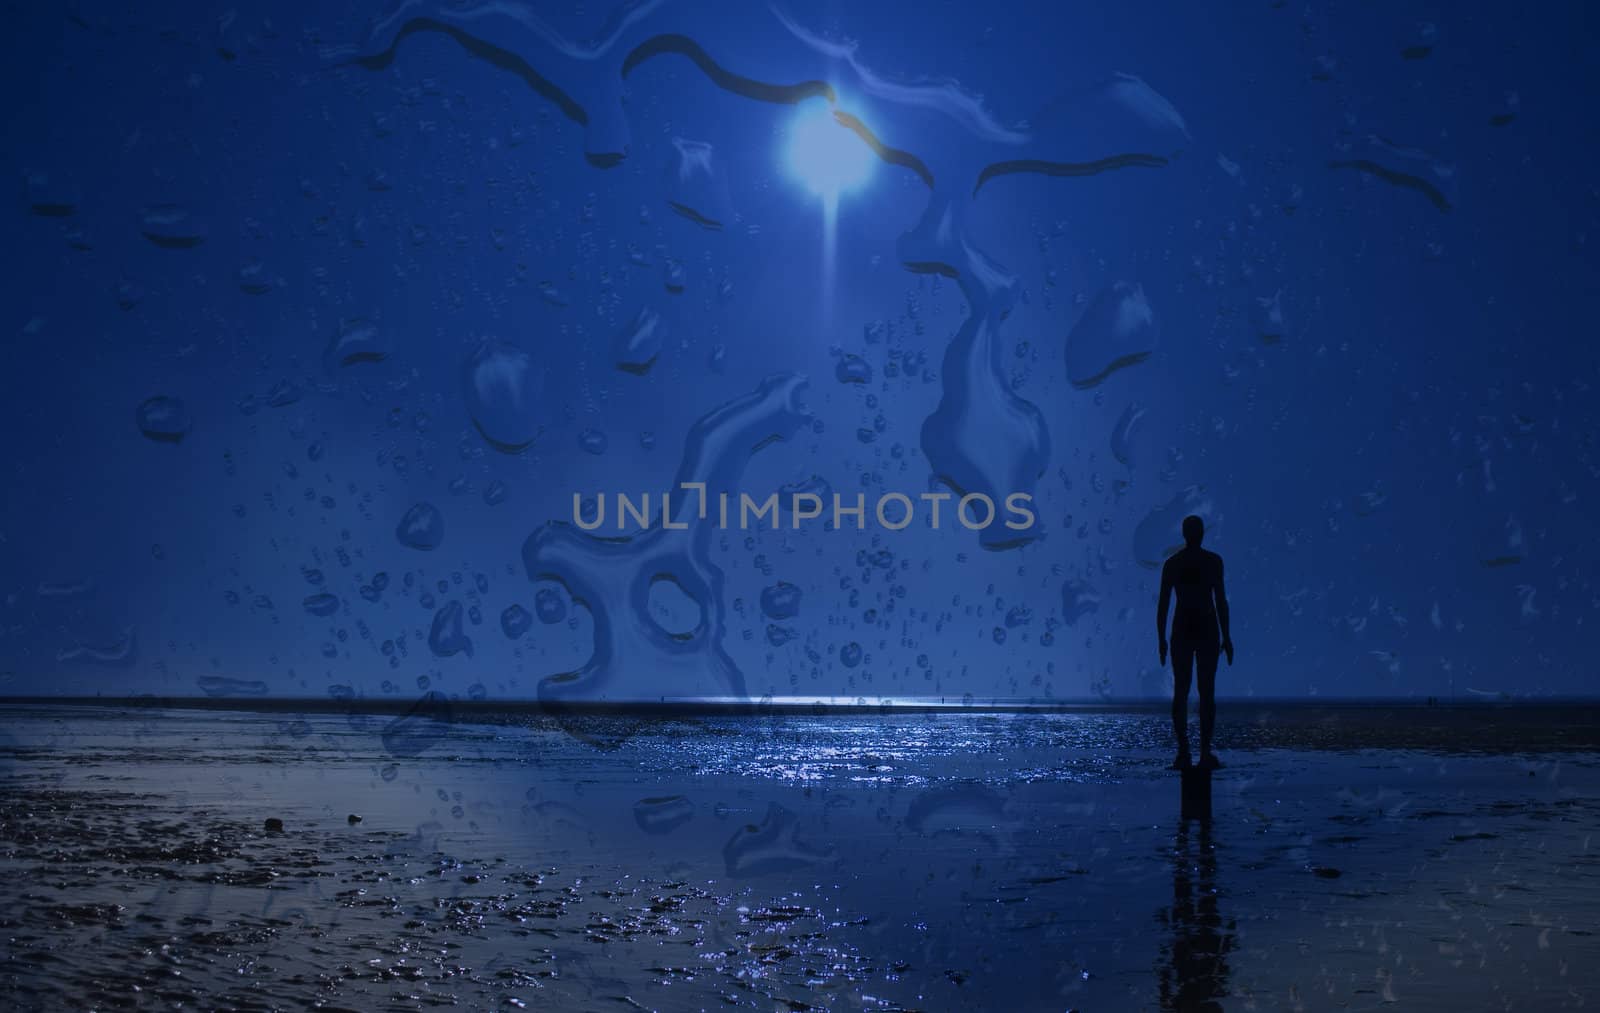 Iron statue on the beach silhouette against a clear blue sky through a rain splashed window